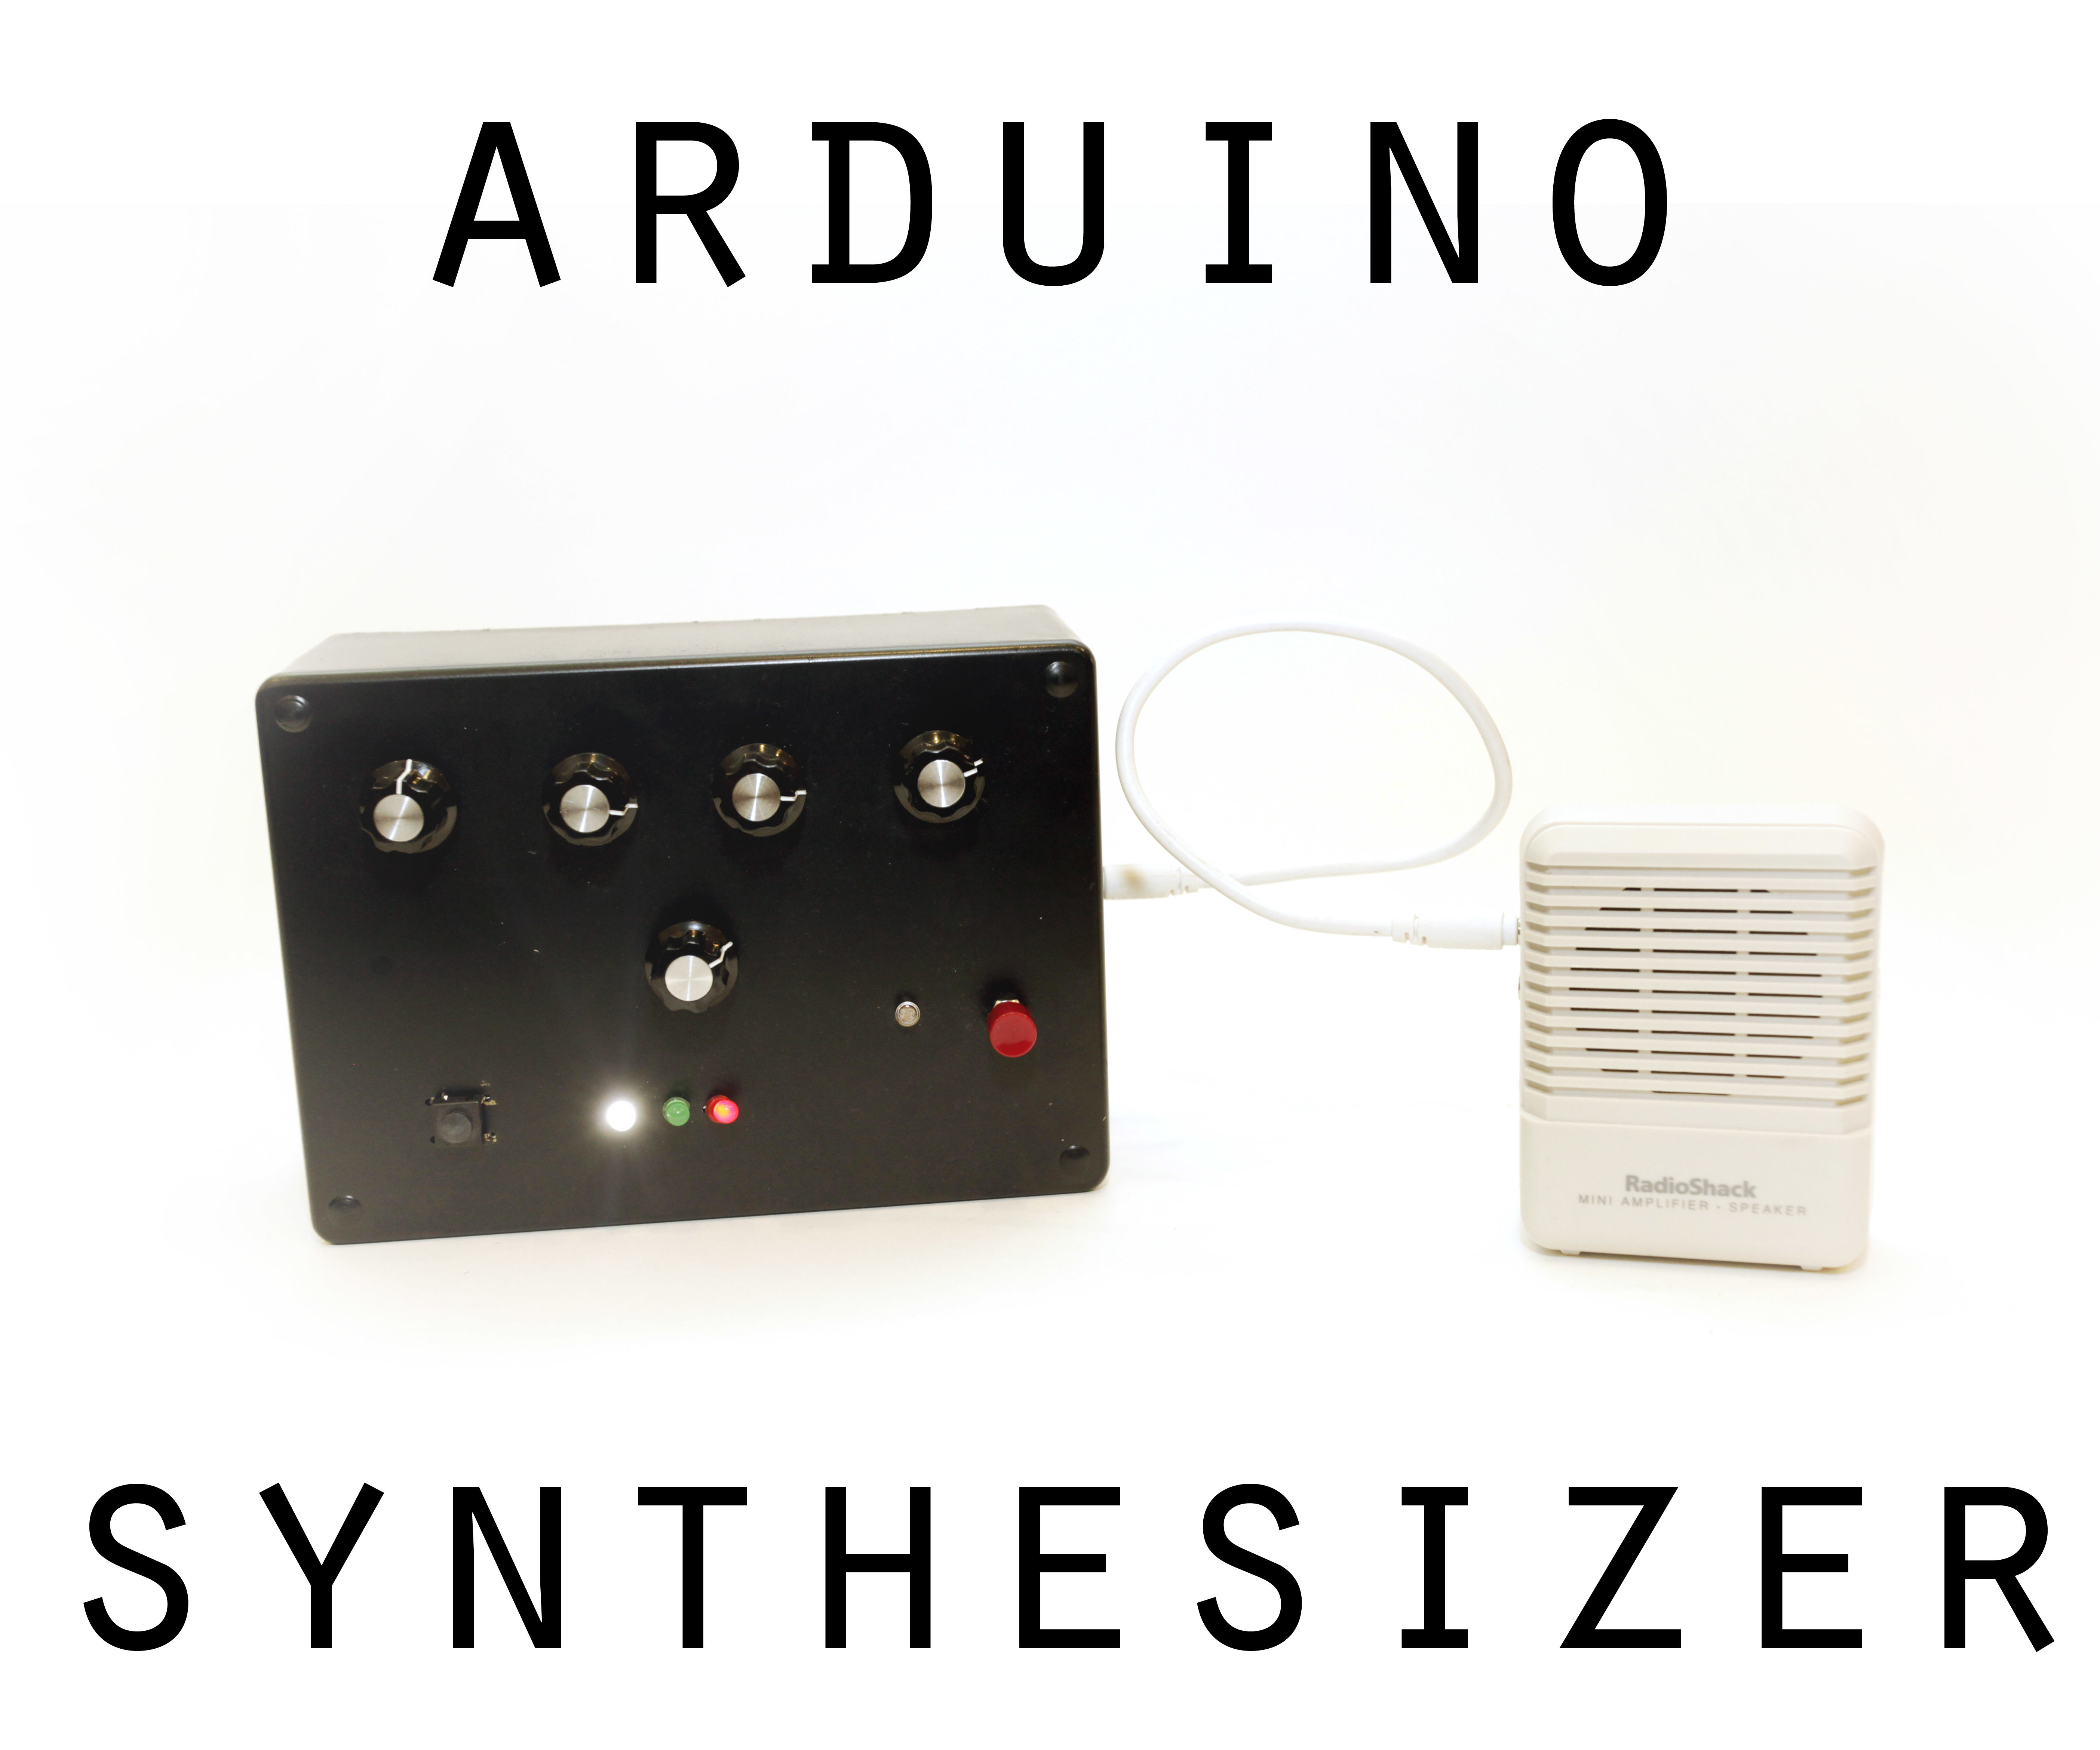 The Arduino Synthesizer